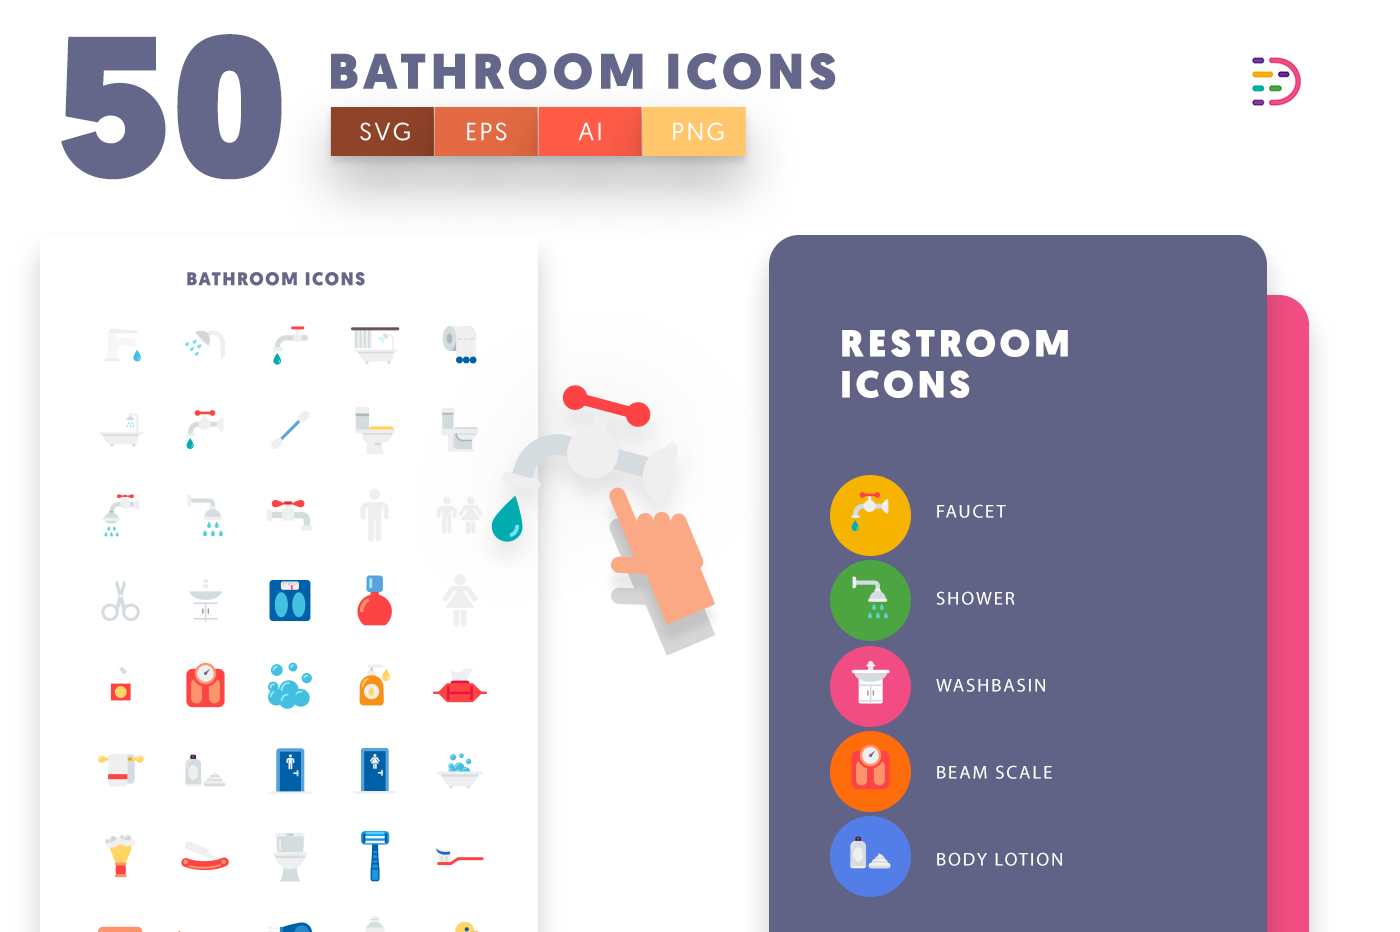 Full vector Bathroom Icons